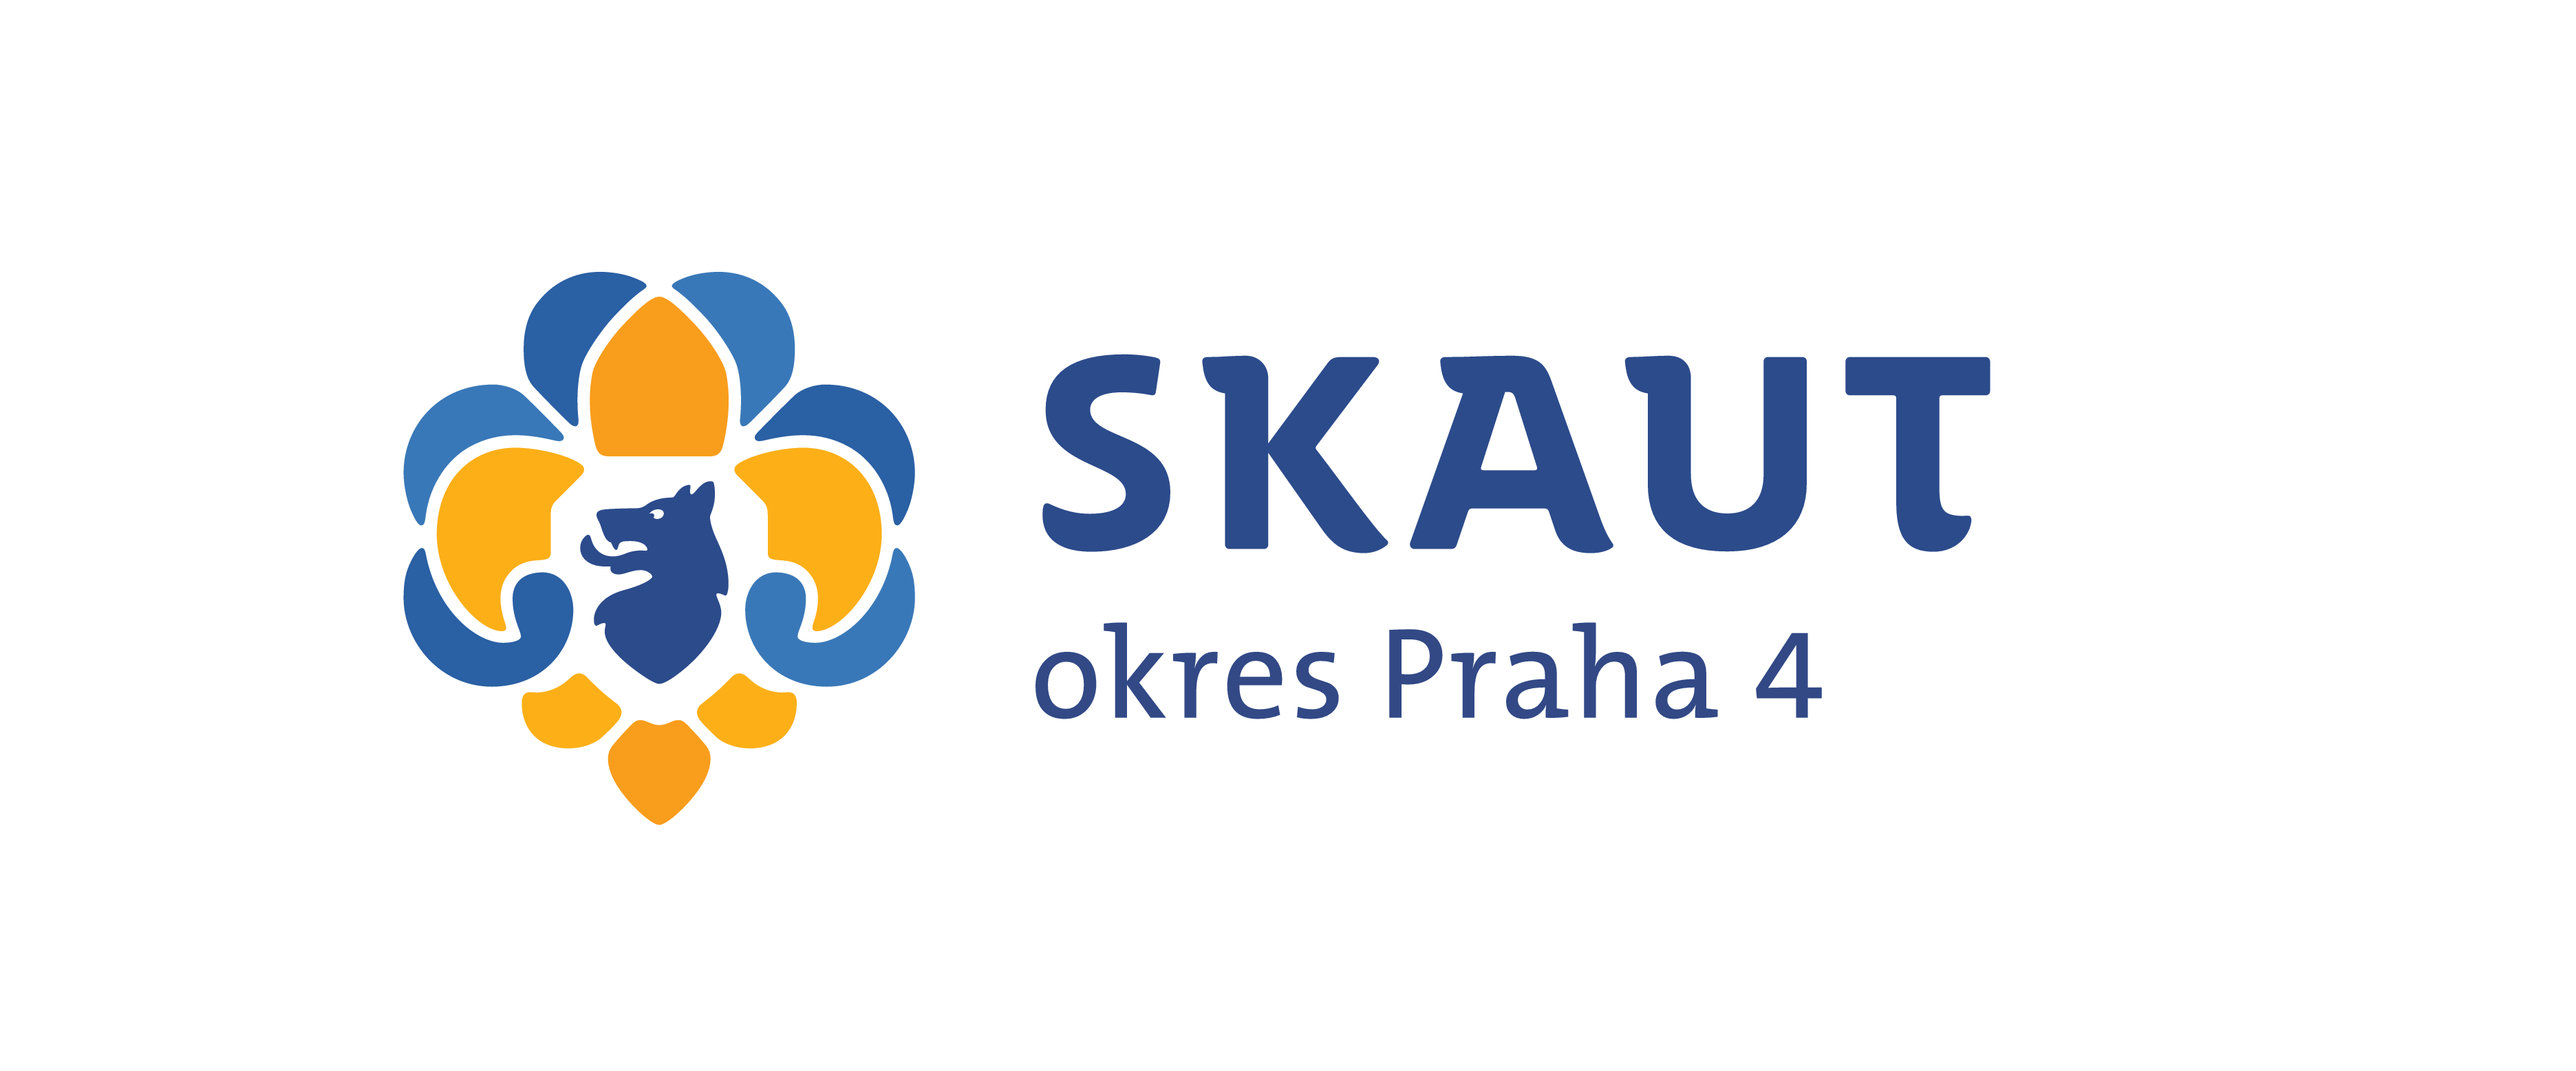 Okres Praha 4